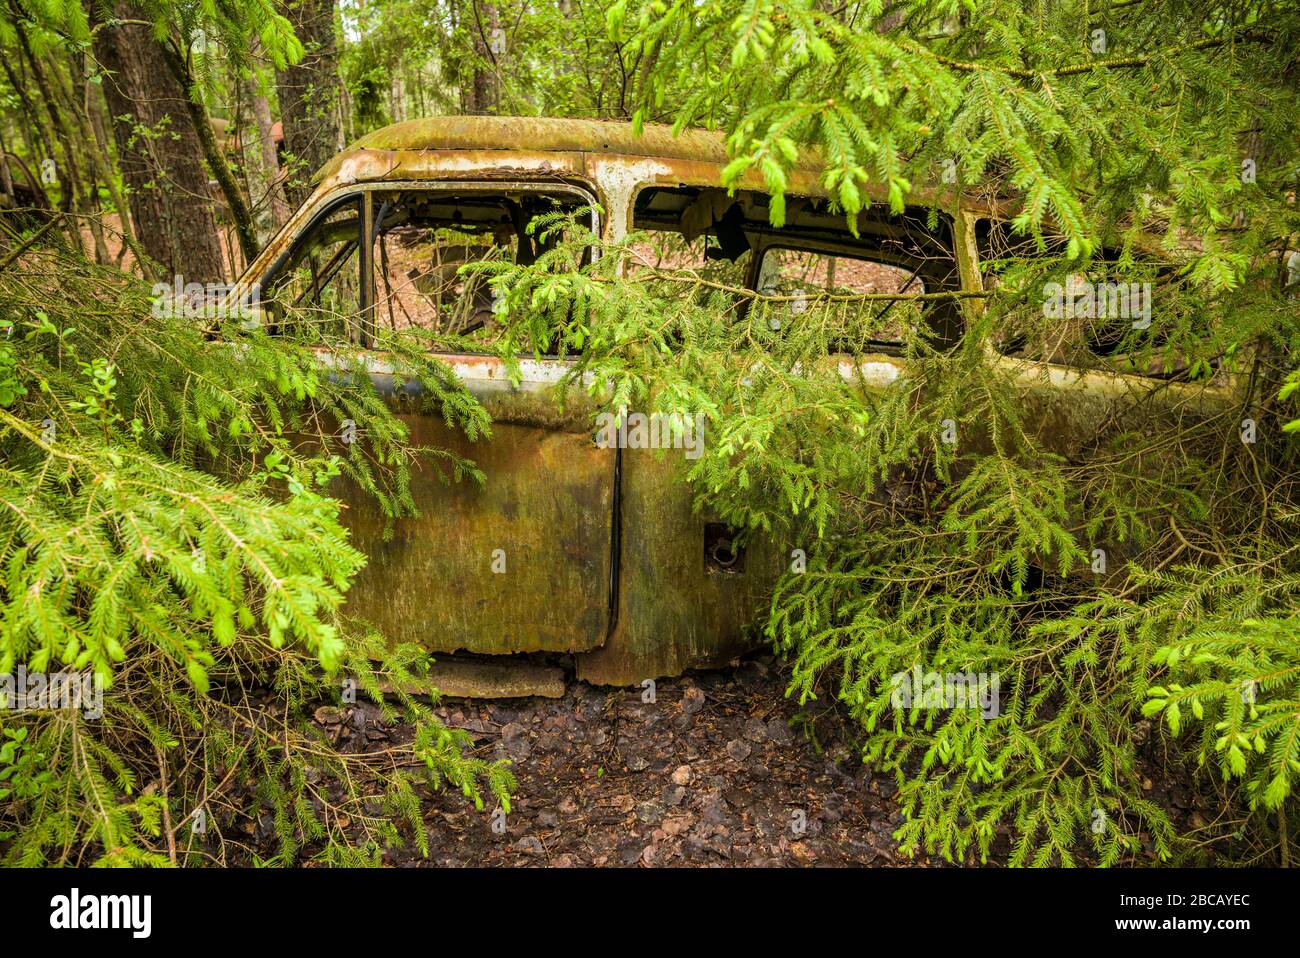 Svezia, Smaland, Ryd, Kyrko Mosse Car Cemetery, ex junkyard ora pubic Park, junked automobili Foto Stock